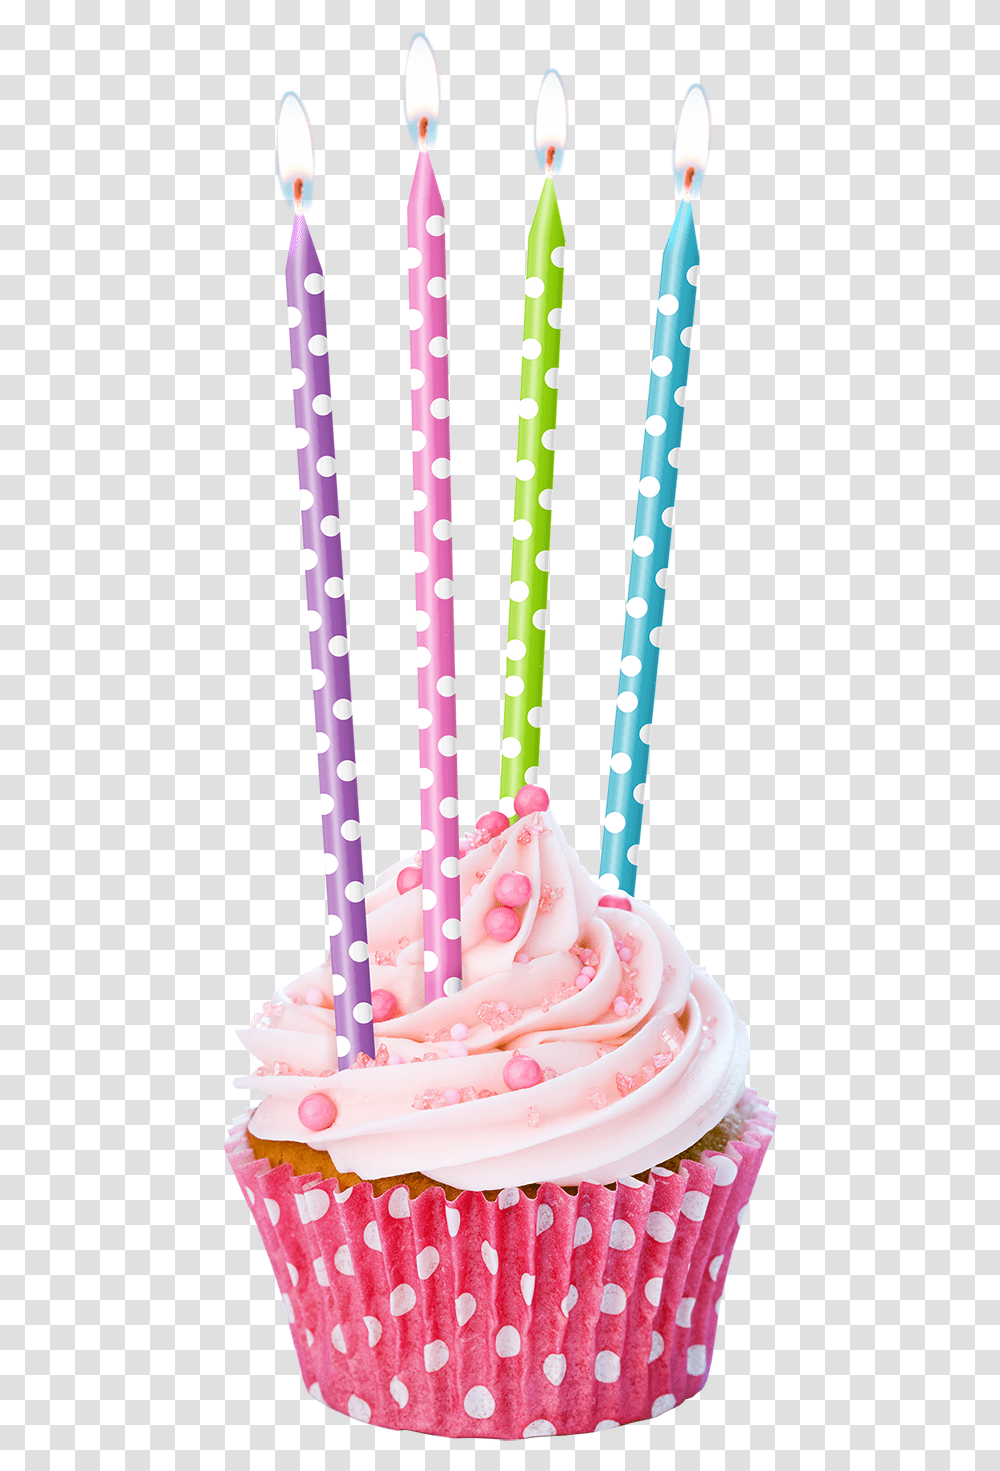 Strawberry Shortcake Cupcake Design, Birthday Cake, Dessert, Food, Texture Transparent Png